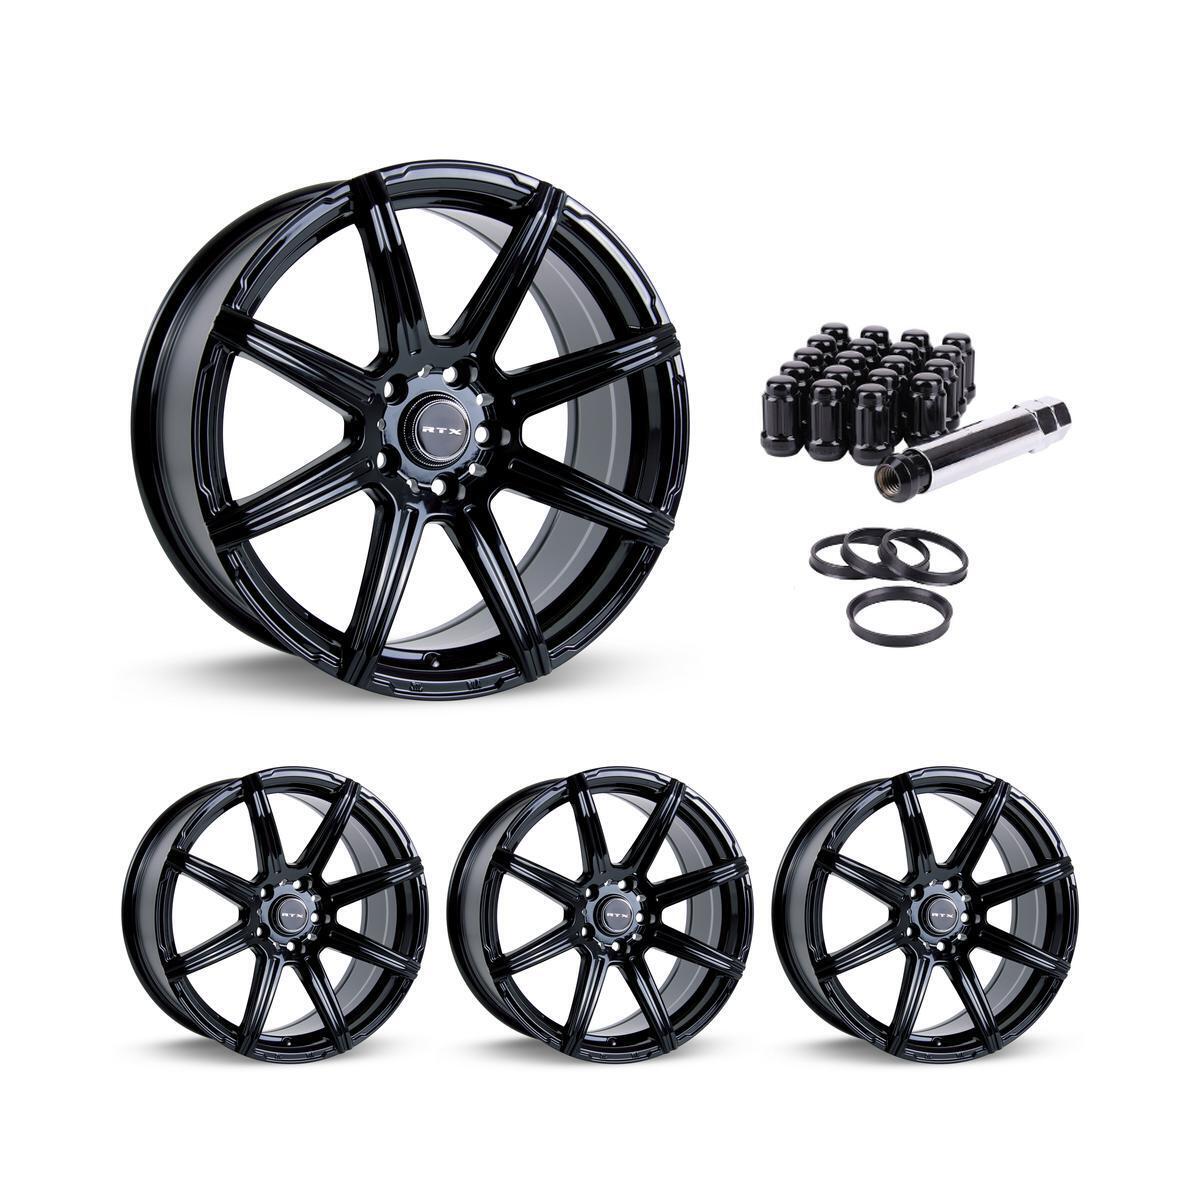 Wheel Rims Set with Black Lug Nuts Kit for 95-05 Pontiac Sunfire P827088 15 inch